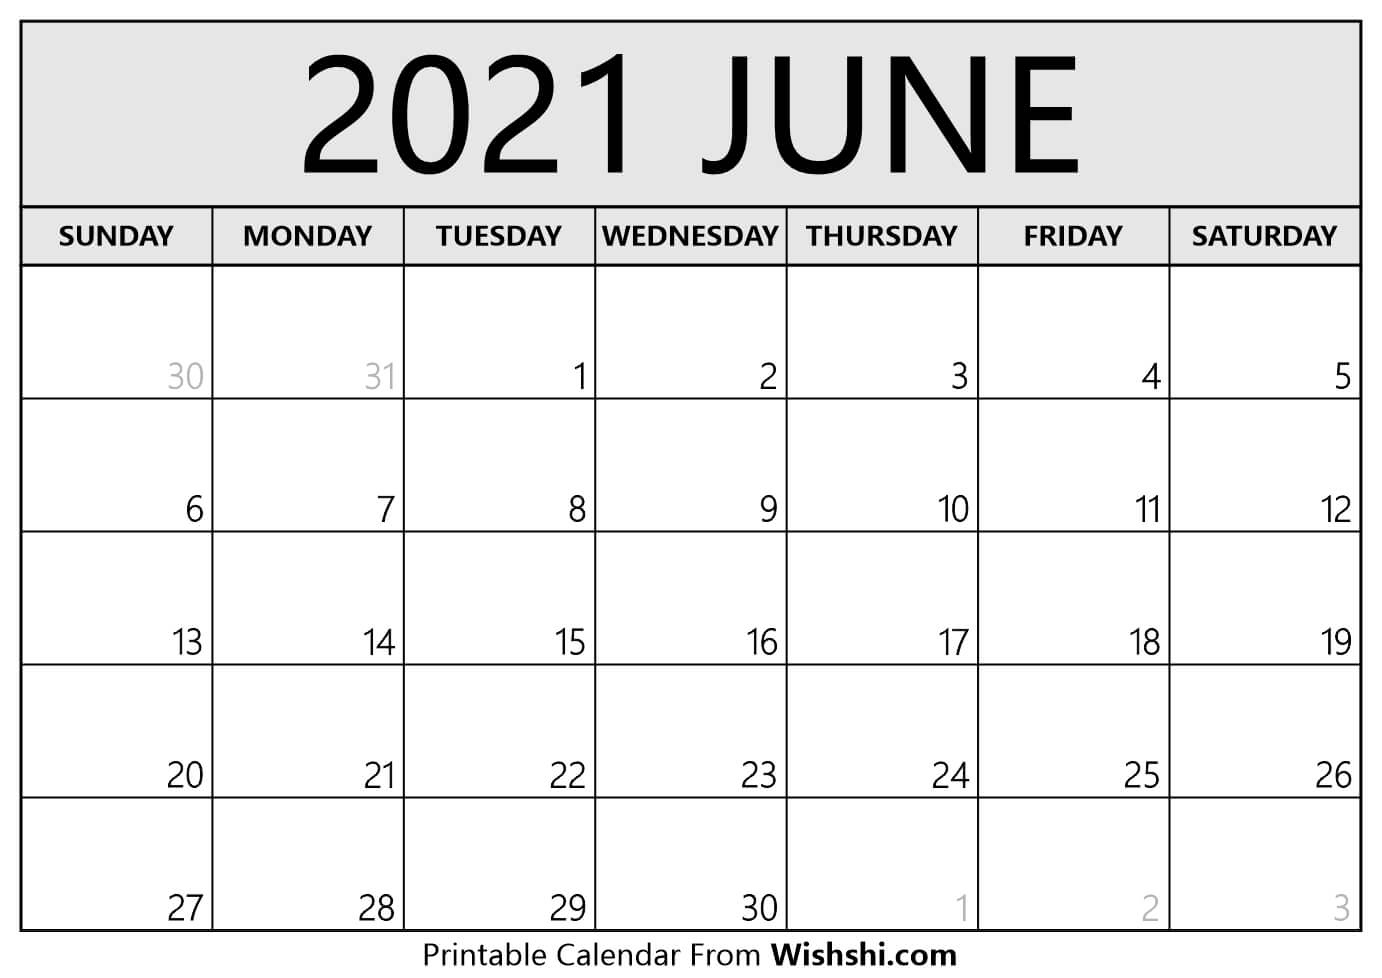 June 2021 Calendar Printable - Free Printable Calendars June 2021 Calendar Printable Cute June 2021 Calendar